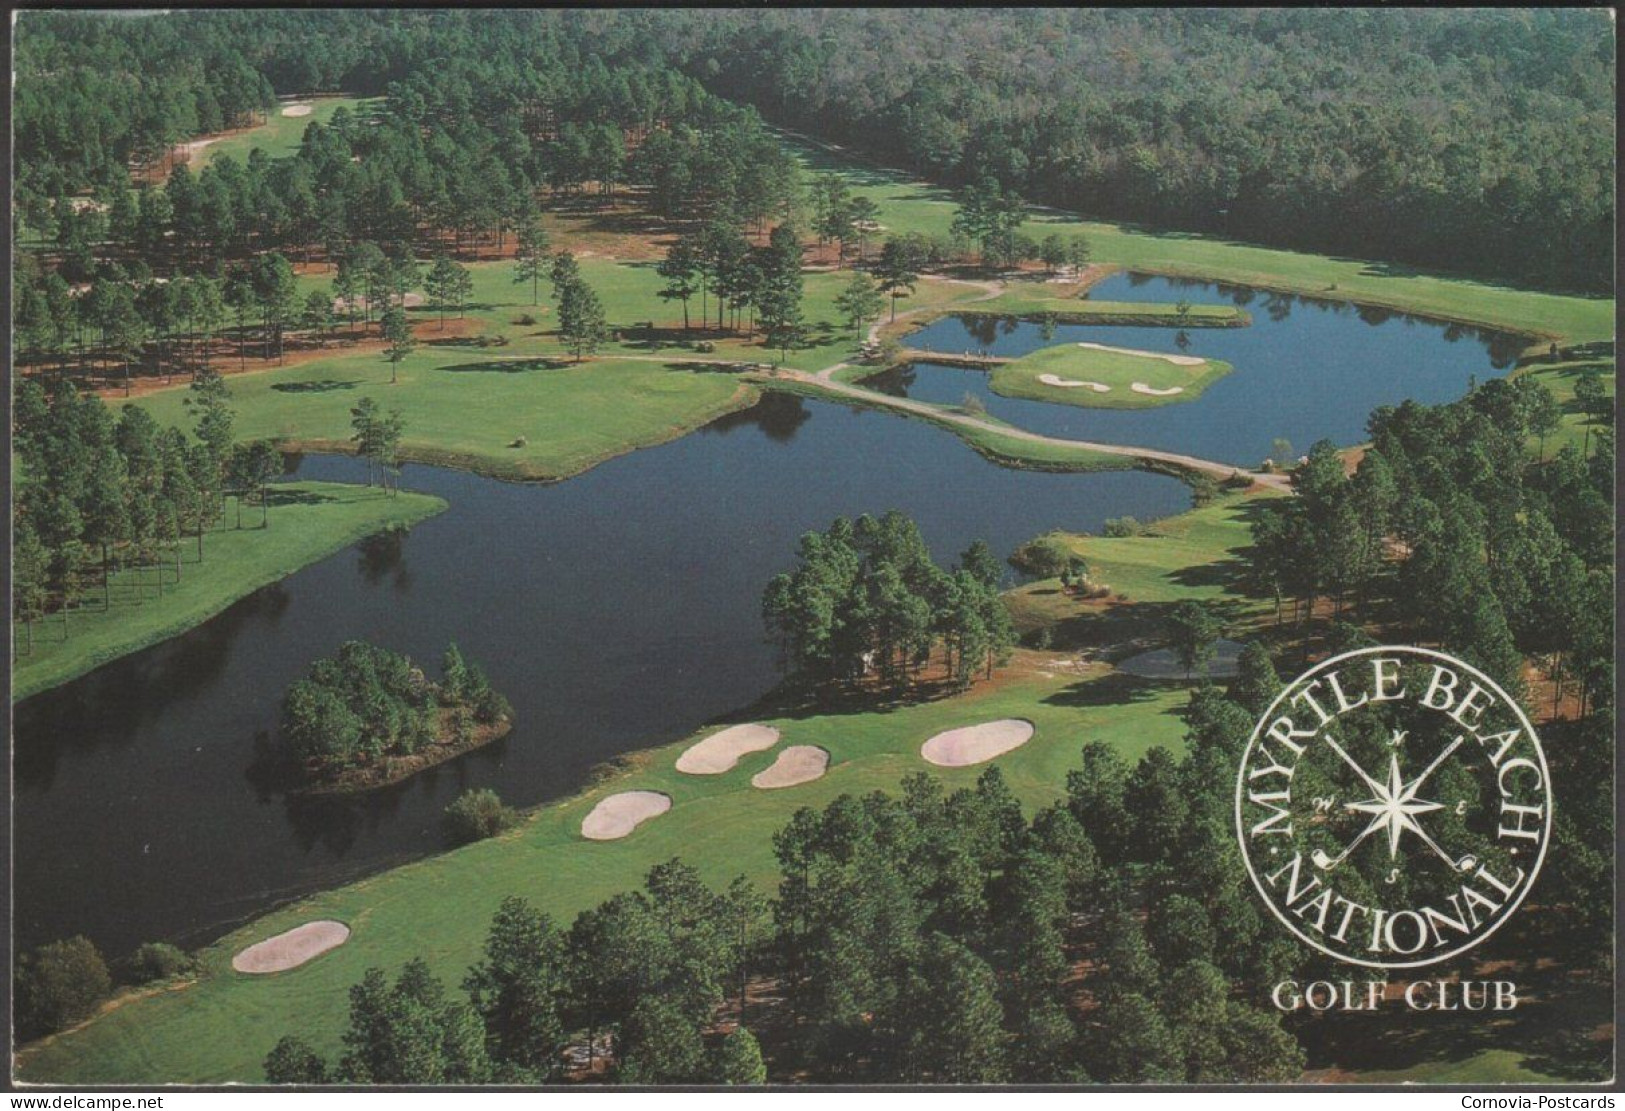 Myrtle Beach National Golf Club, South Carolina, 1995 - Brandon Sales Postcard - Myrtle Beach